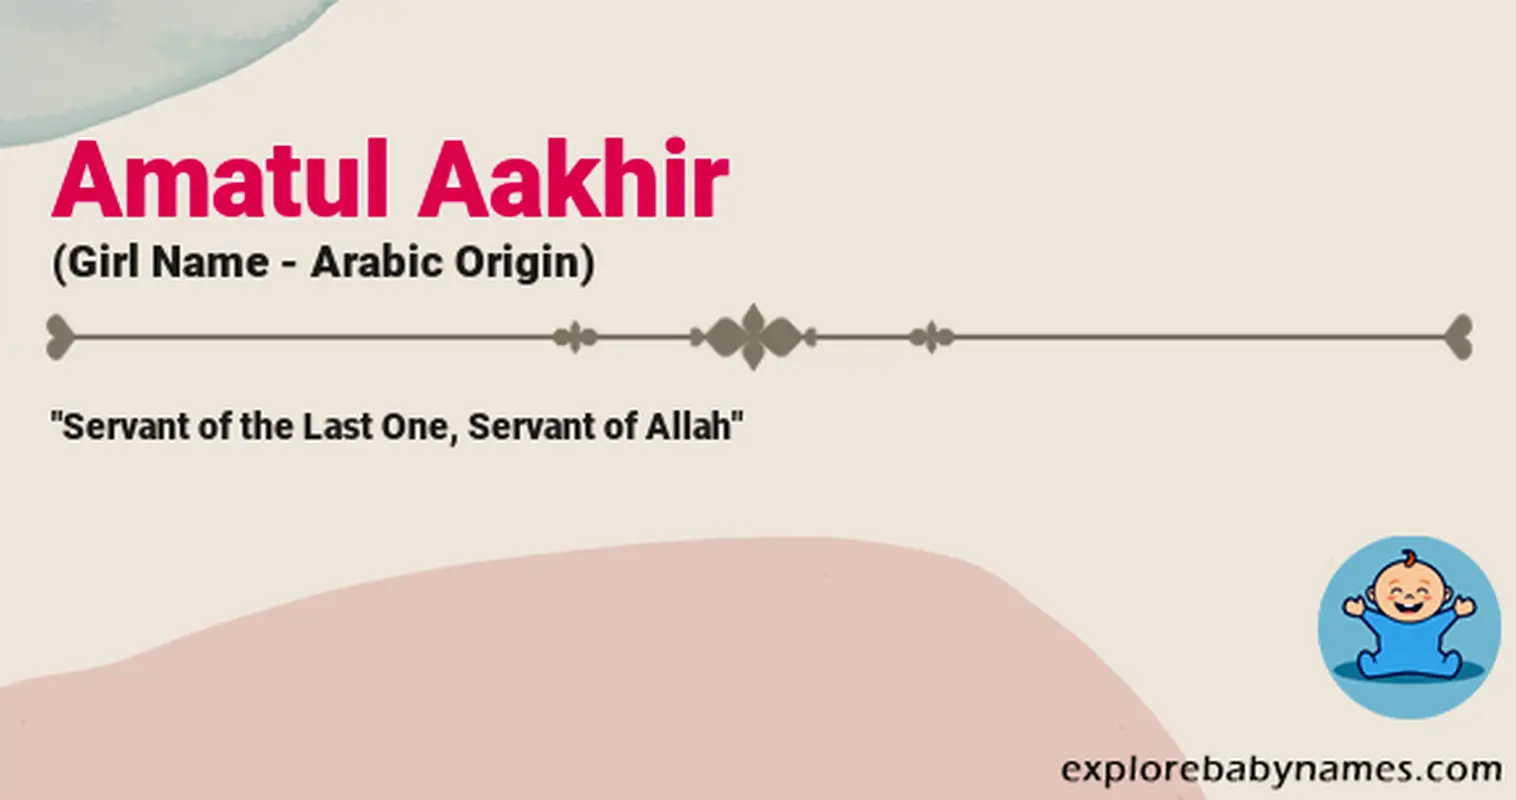 Meaning of Amatul Aakhir